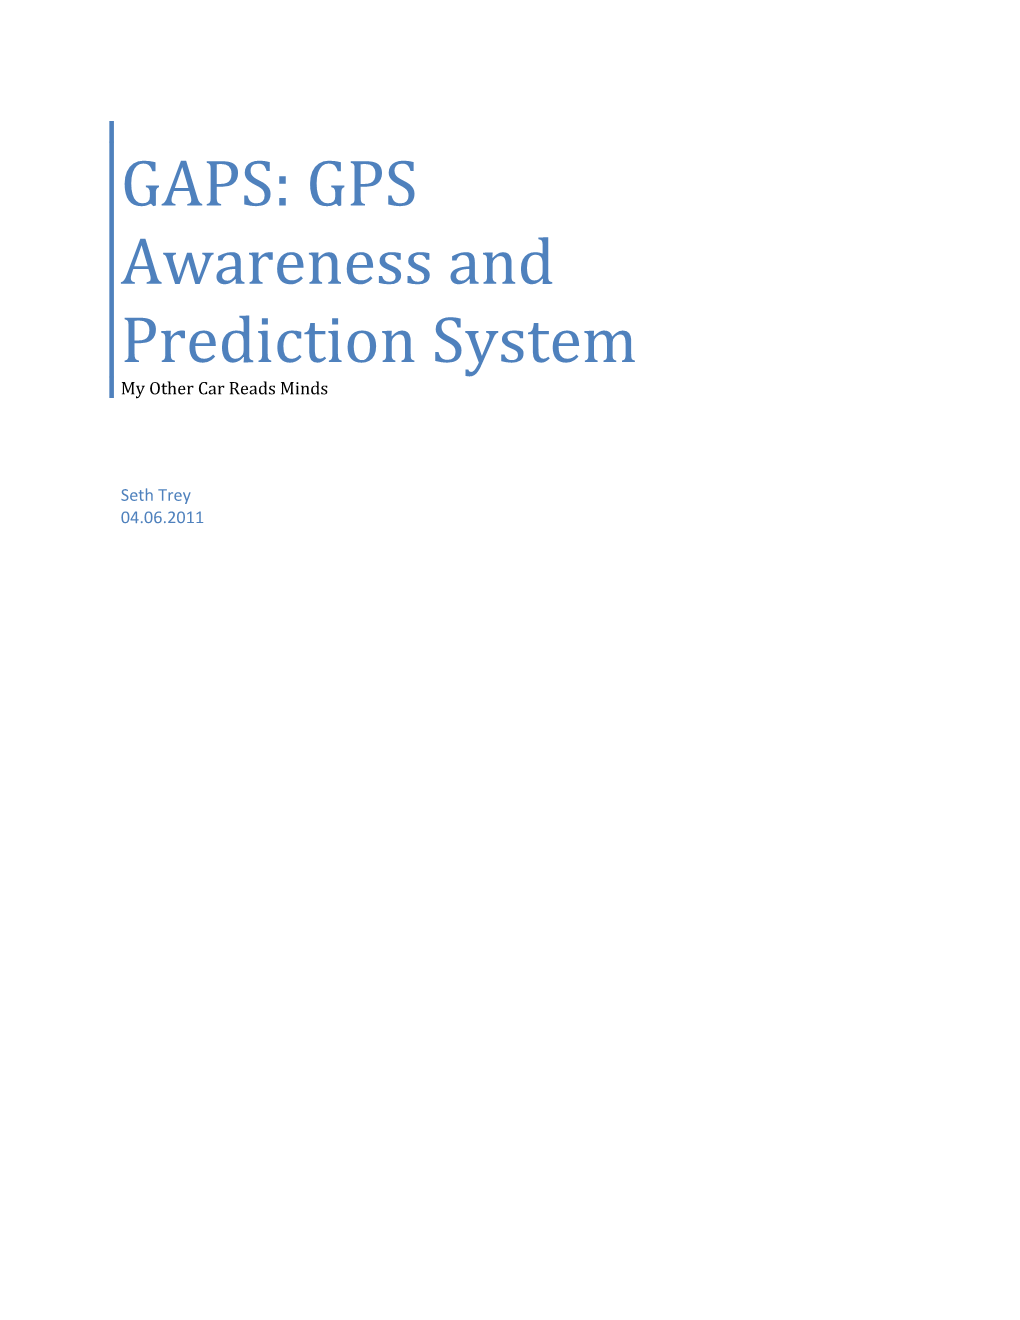 GAPS: GPS Awareness and Prediction System